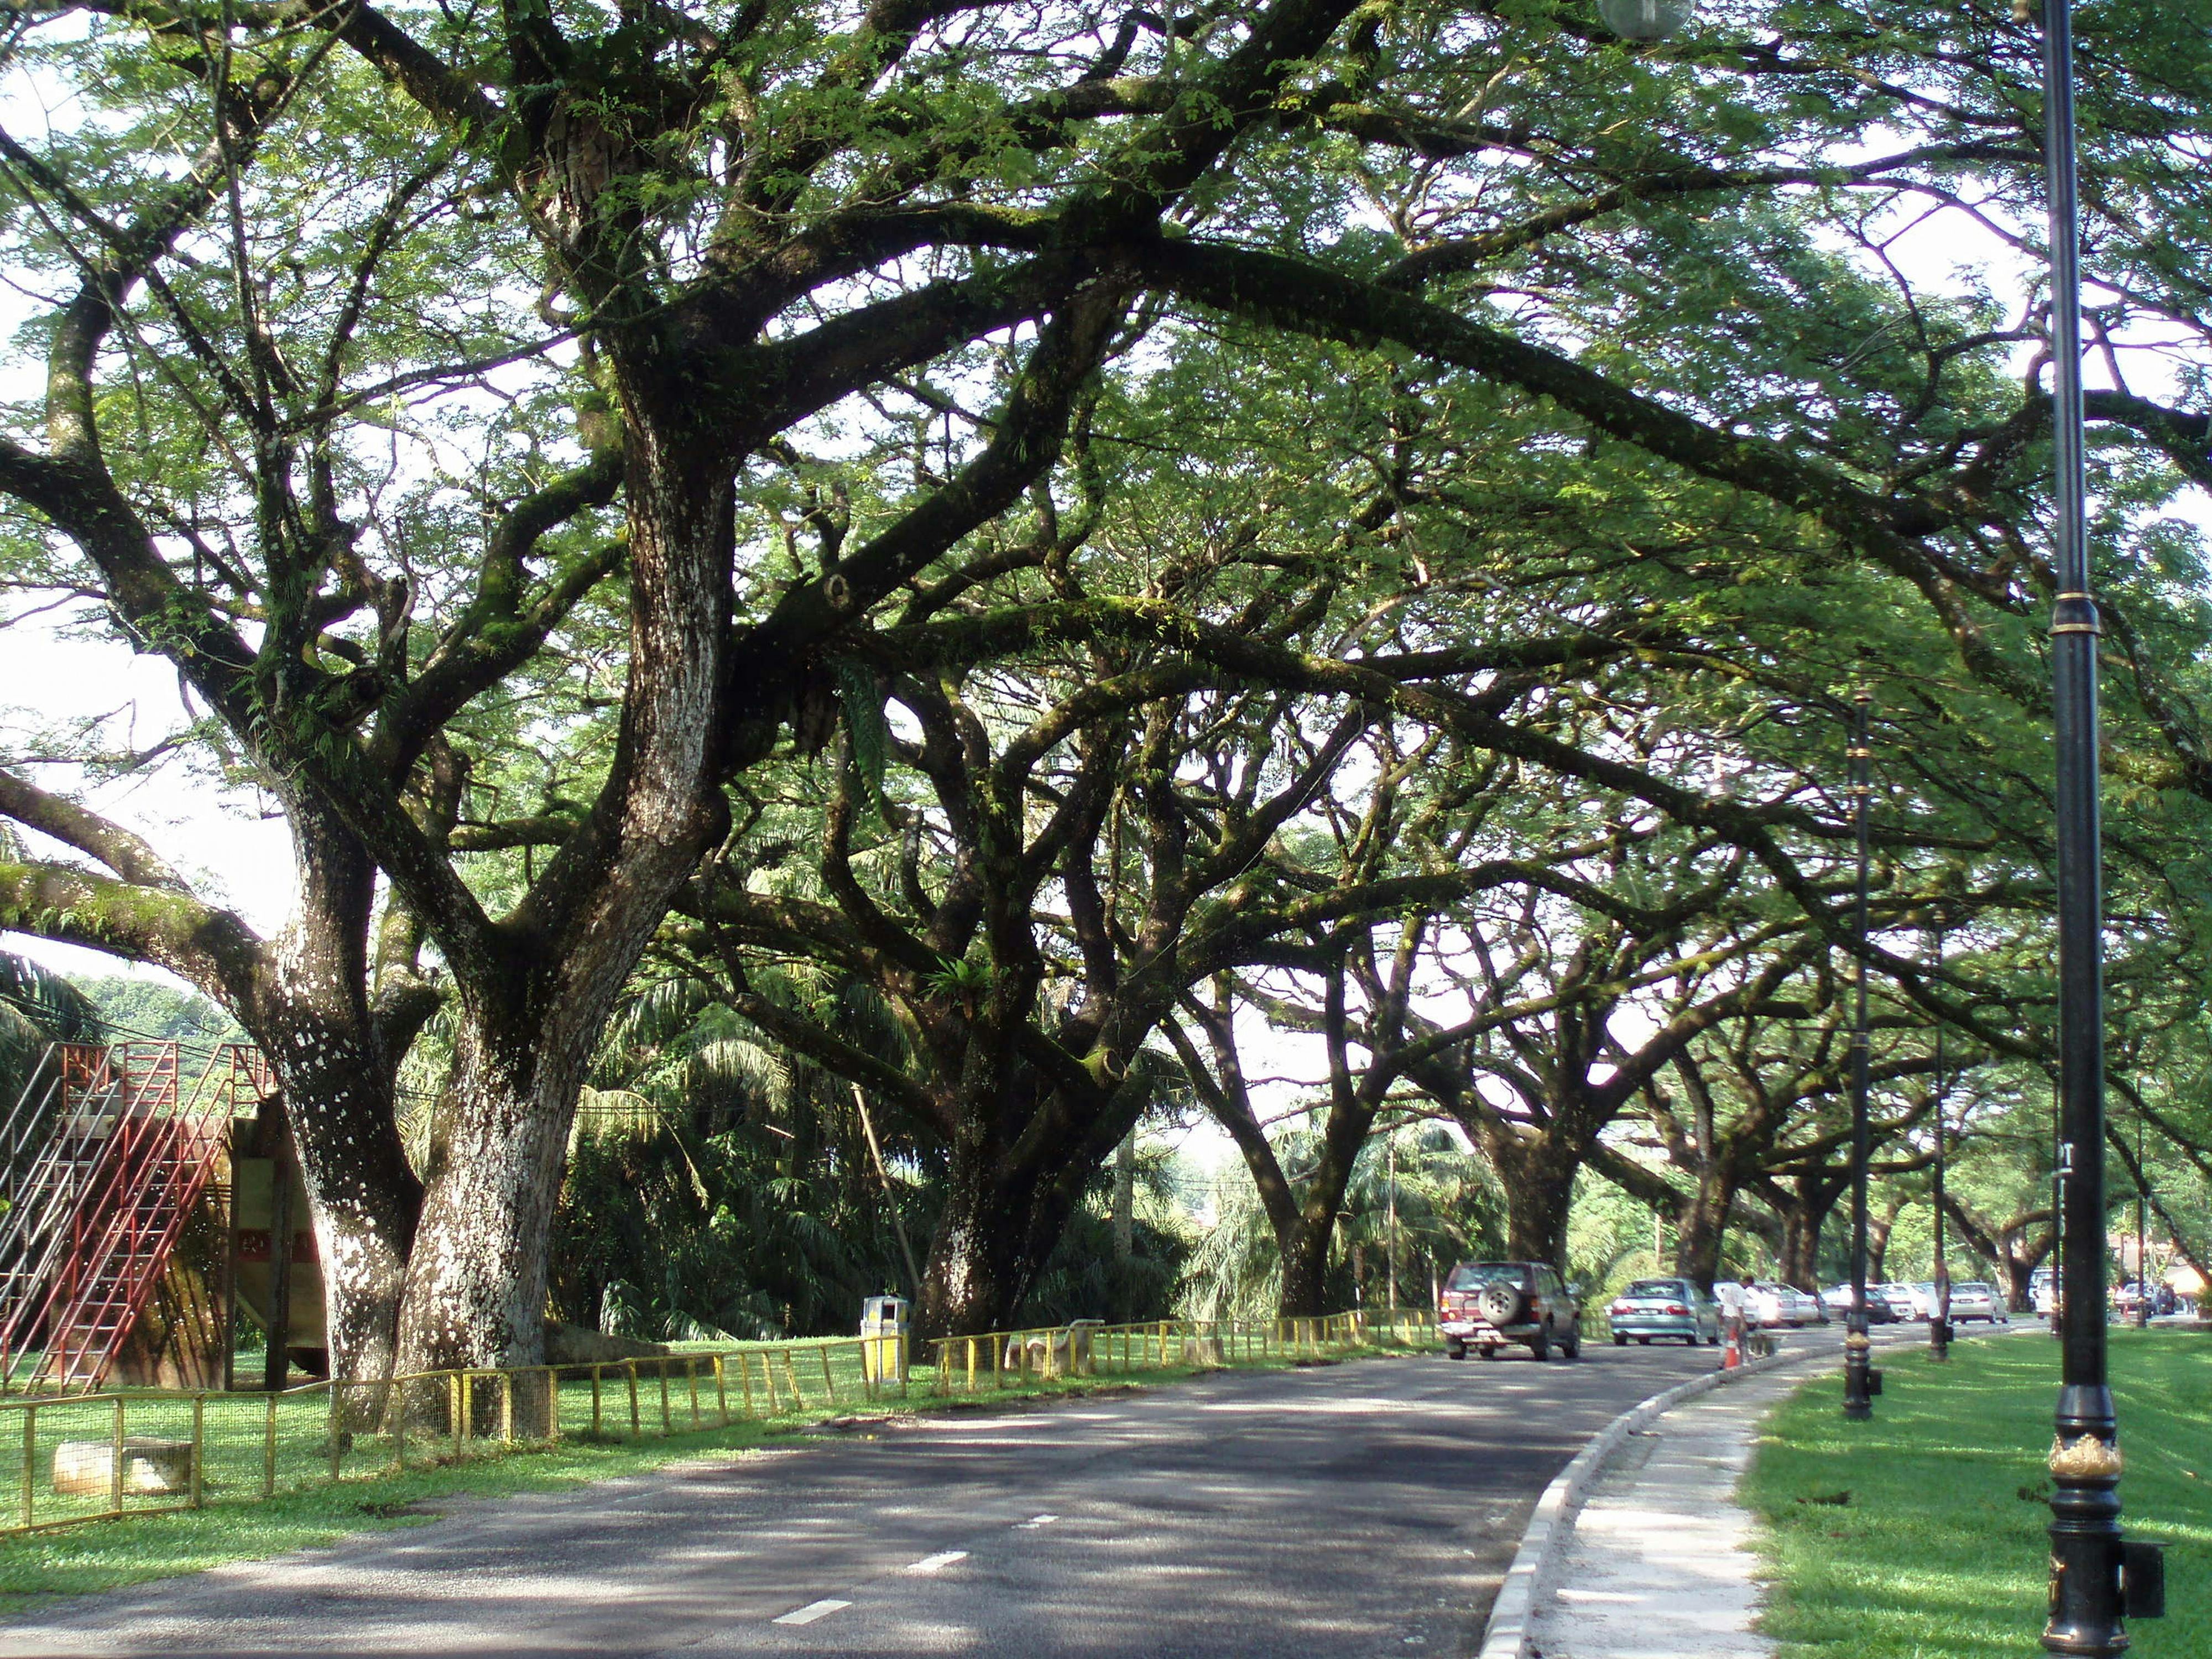 Raintrees along main road